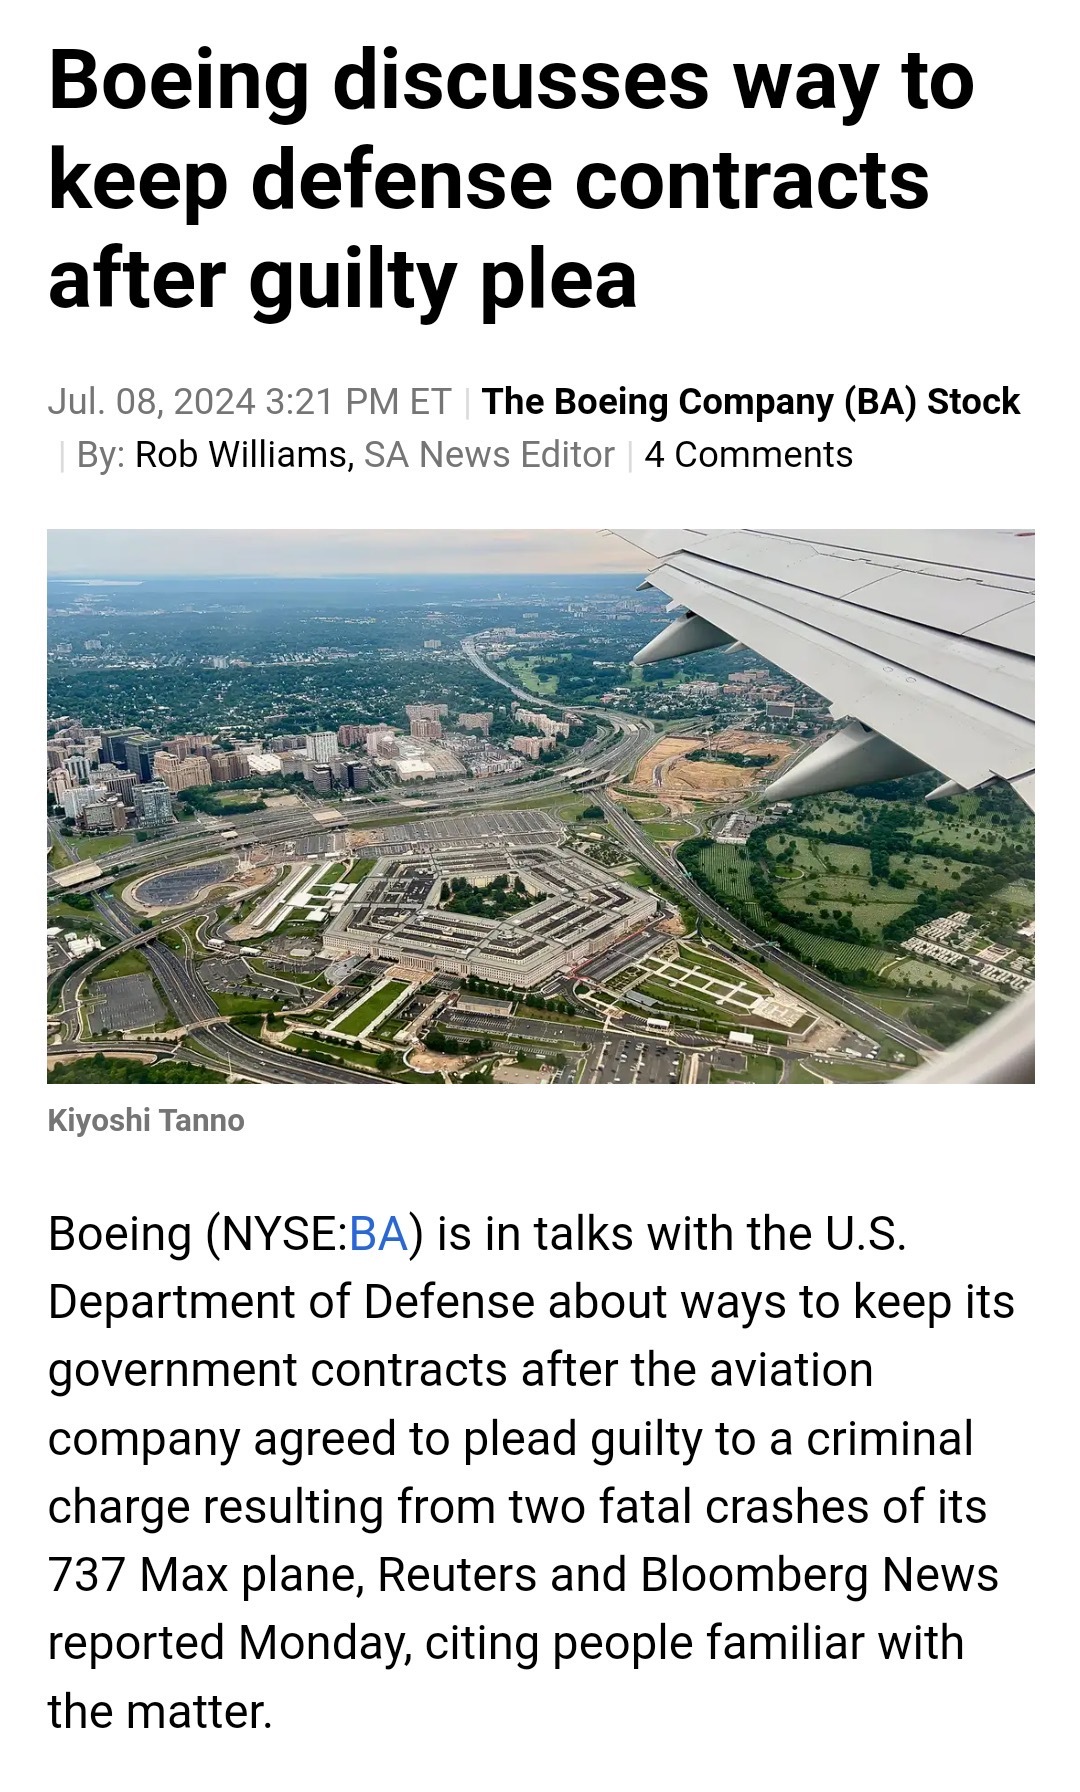 $Boeing (BA.US)$